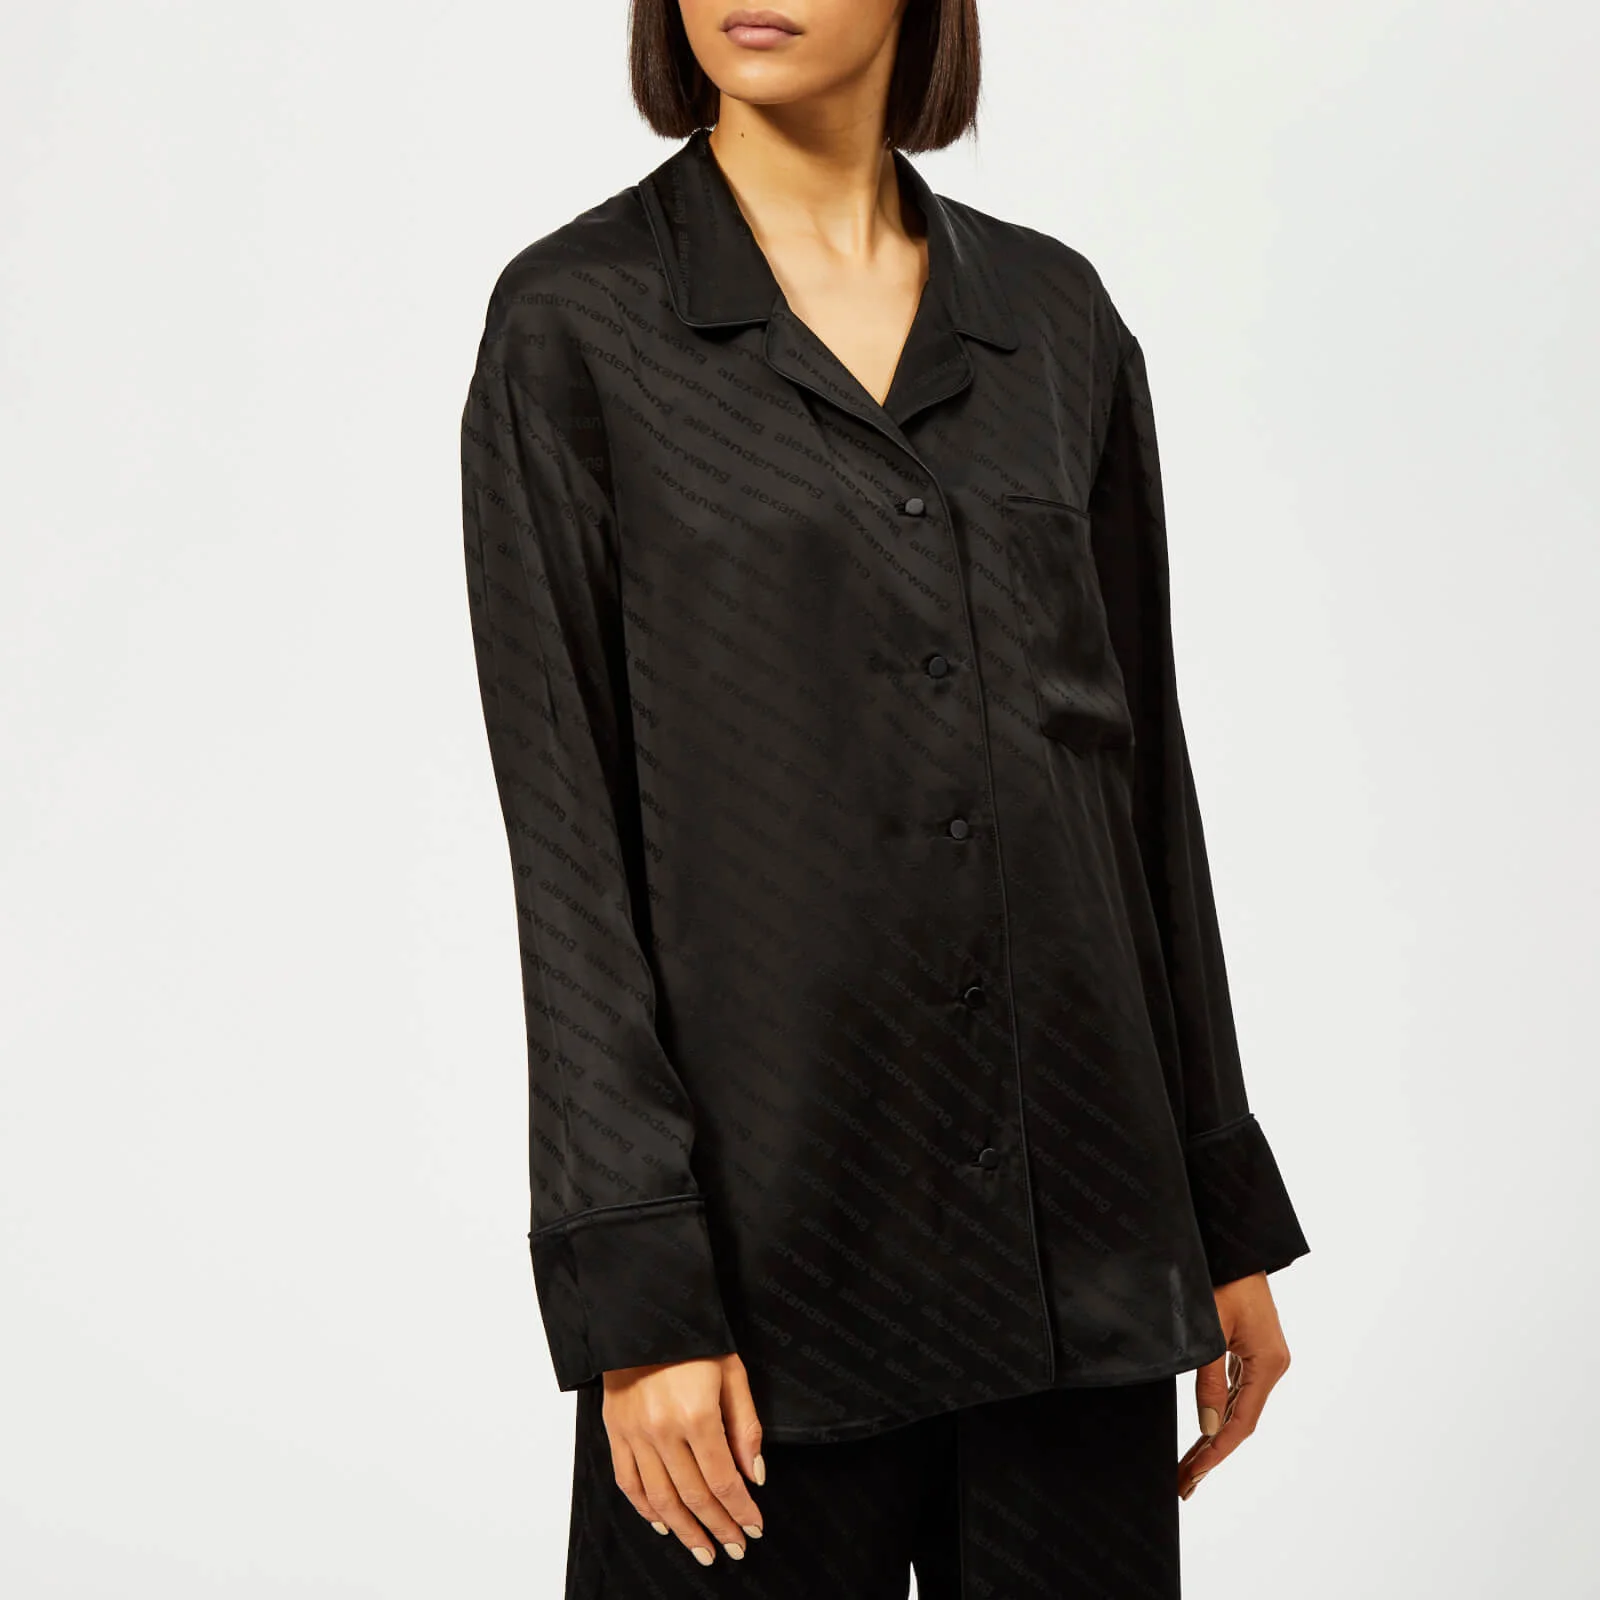 Alexander Wang Women's Long Sleeve Pyjama Shirt - Black Image 1